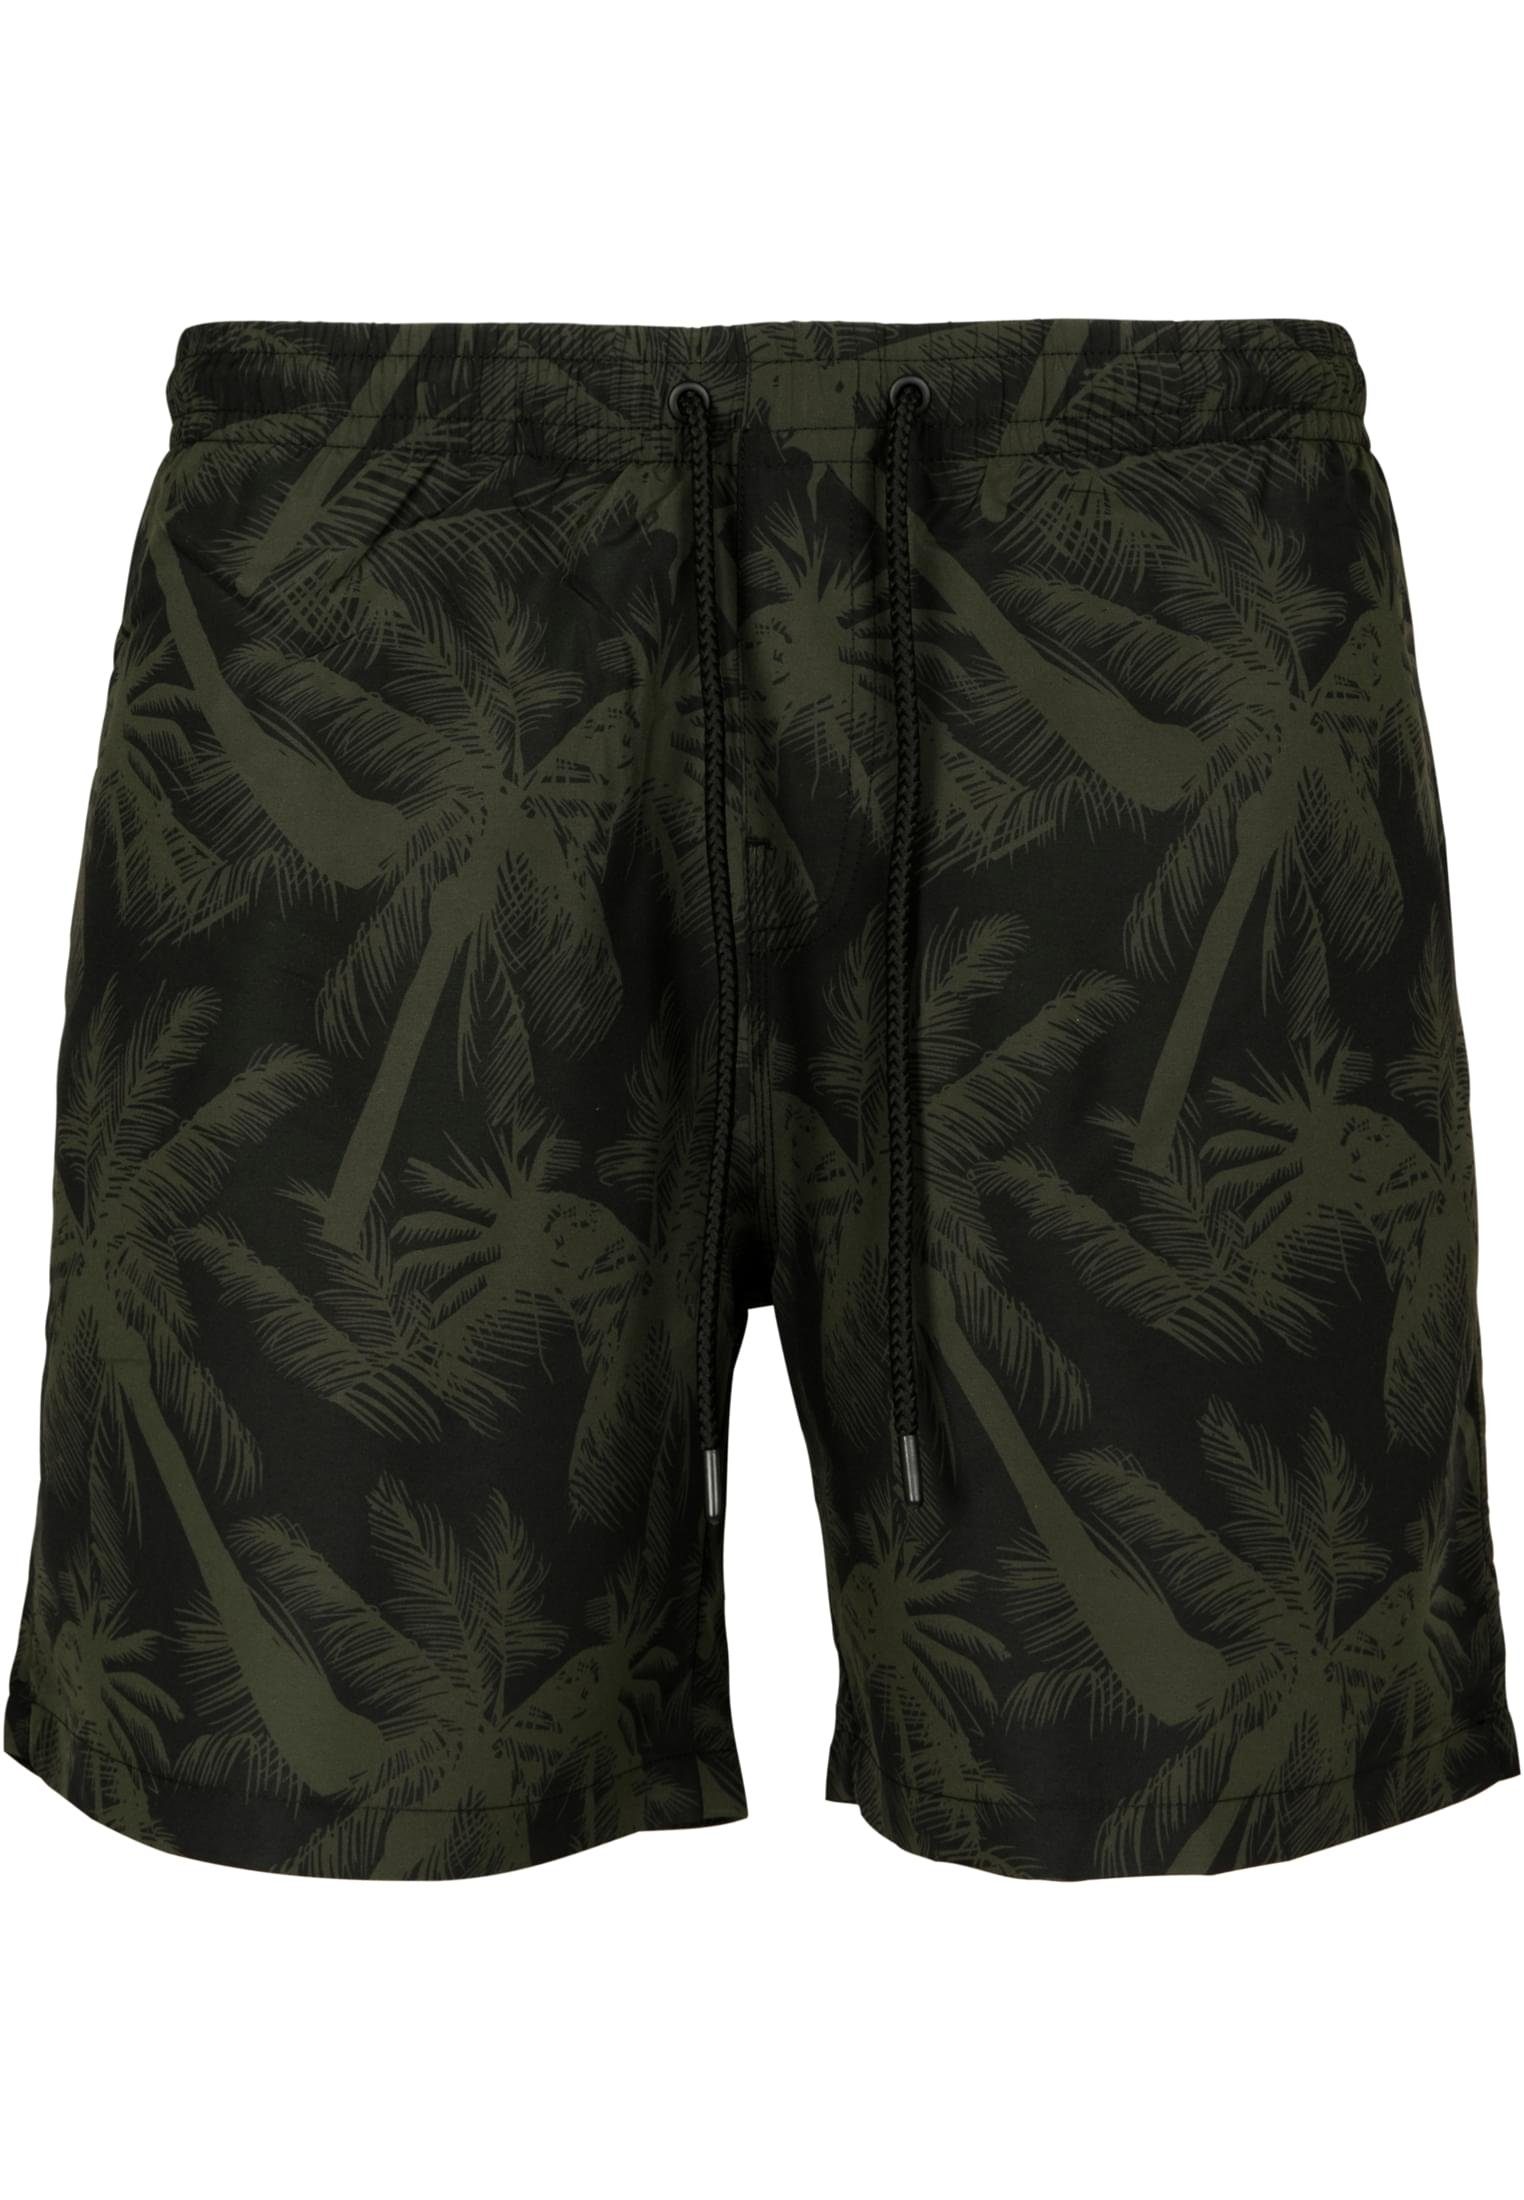 URBAN CLASSICS Badeshorts palm/olive Shorts Pattern Swim Herren